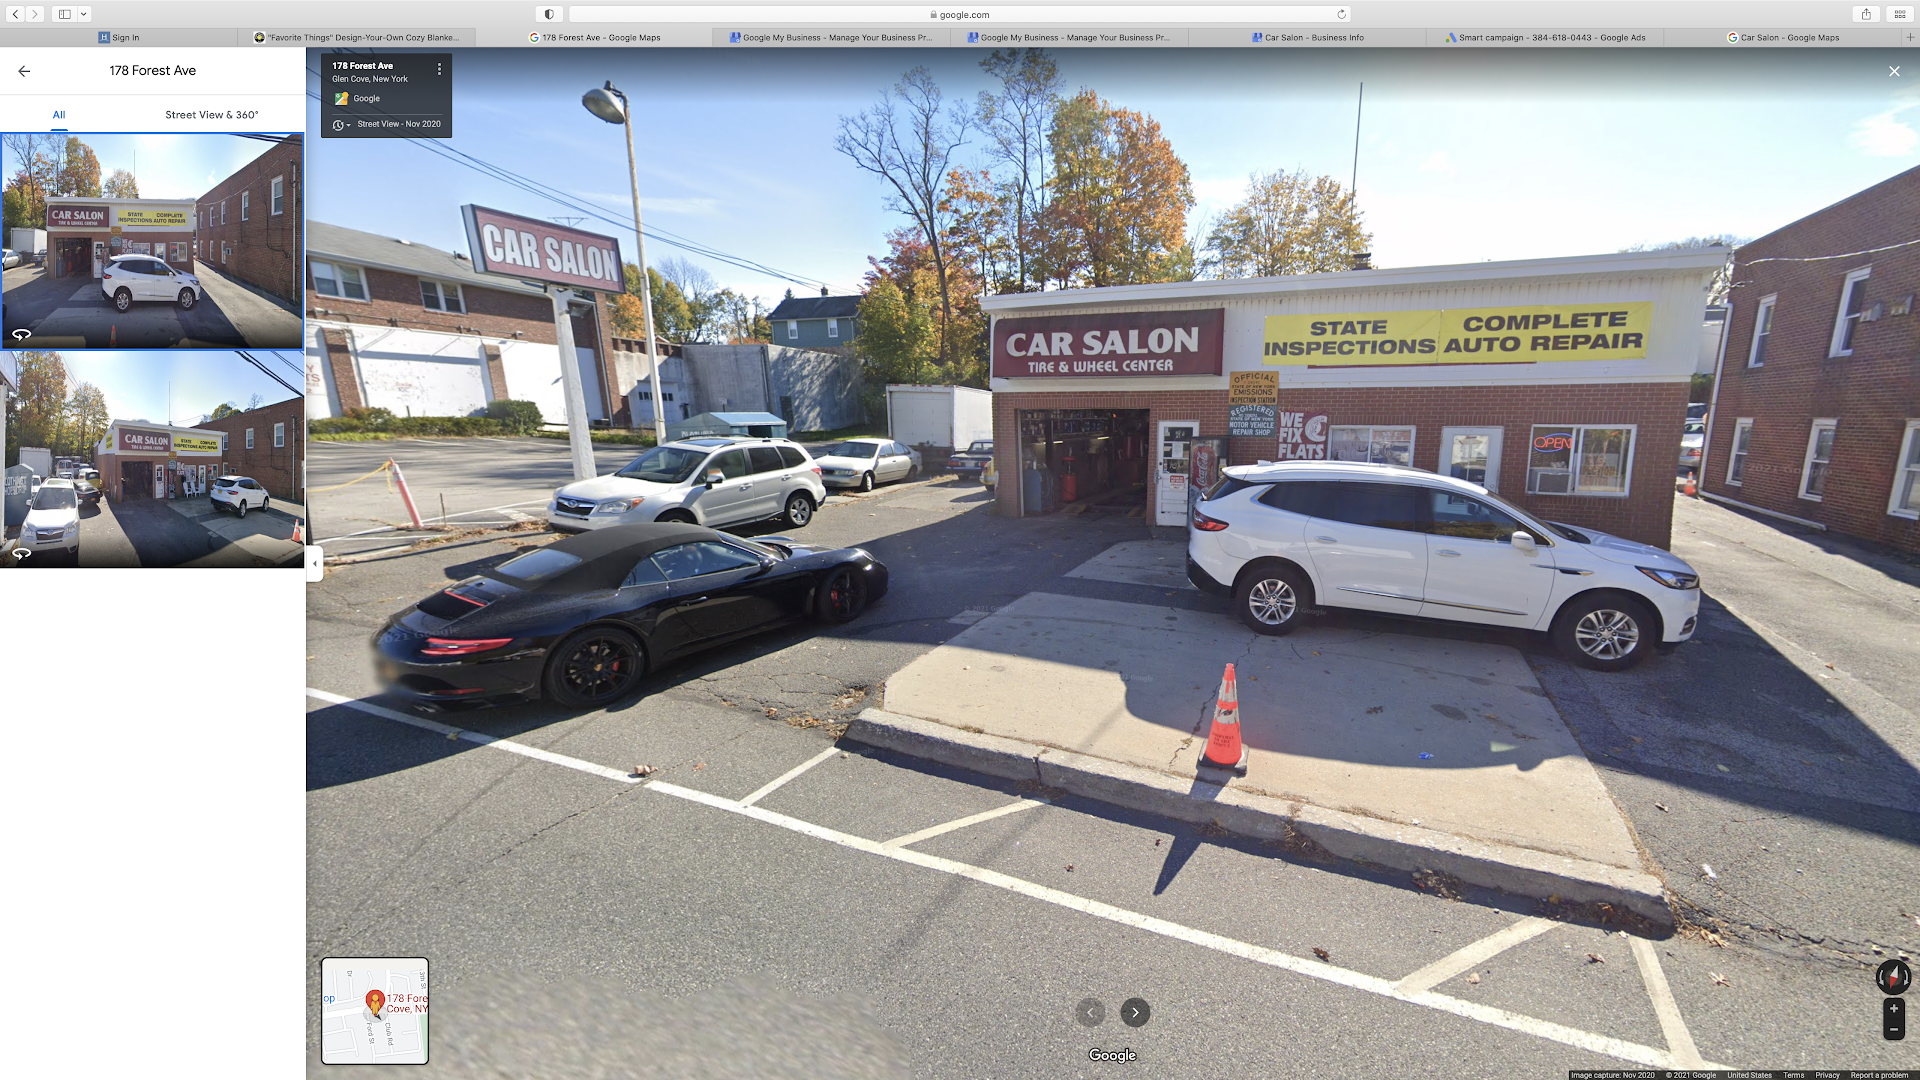 Car Salon | Auto bodywork mechanic in Glen Cove, NY